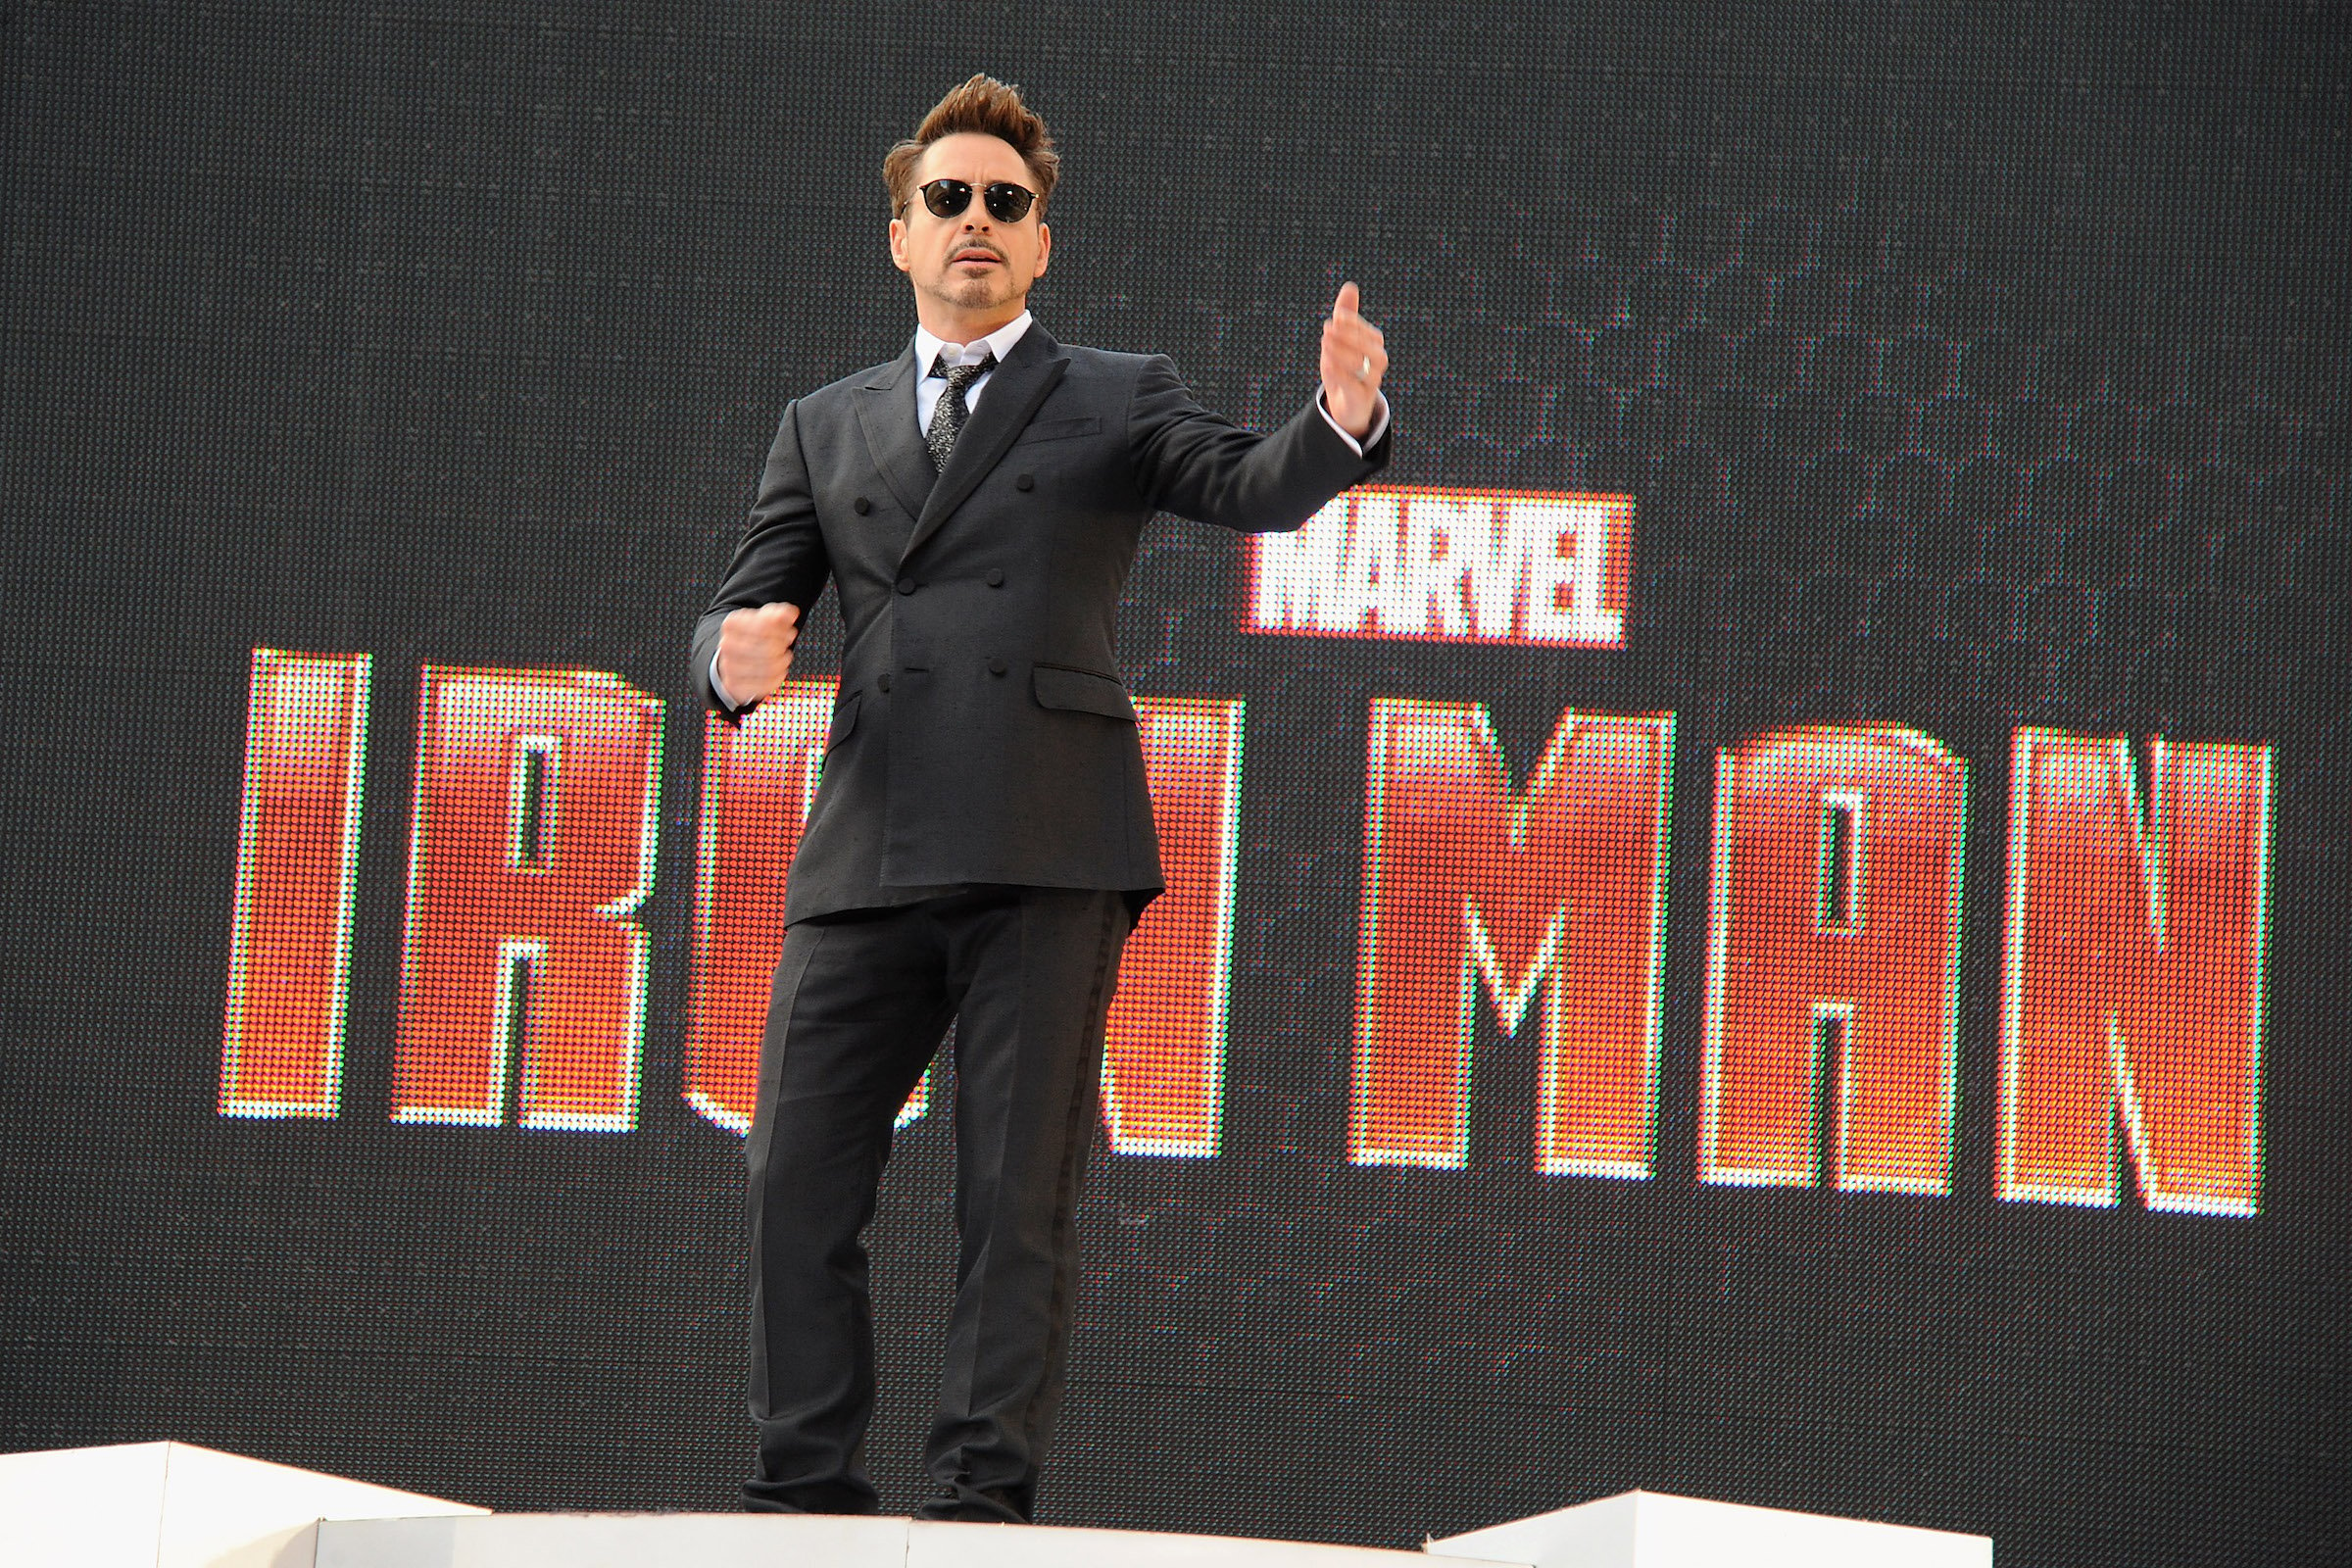 Actor Robert Downey Jr. attends the 'Iron Man 3' Special Screening